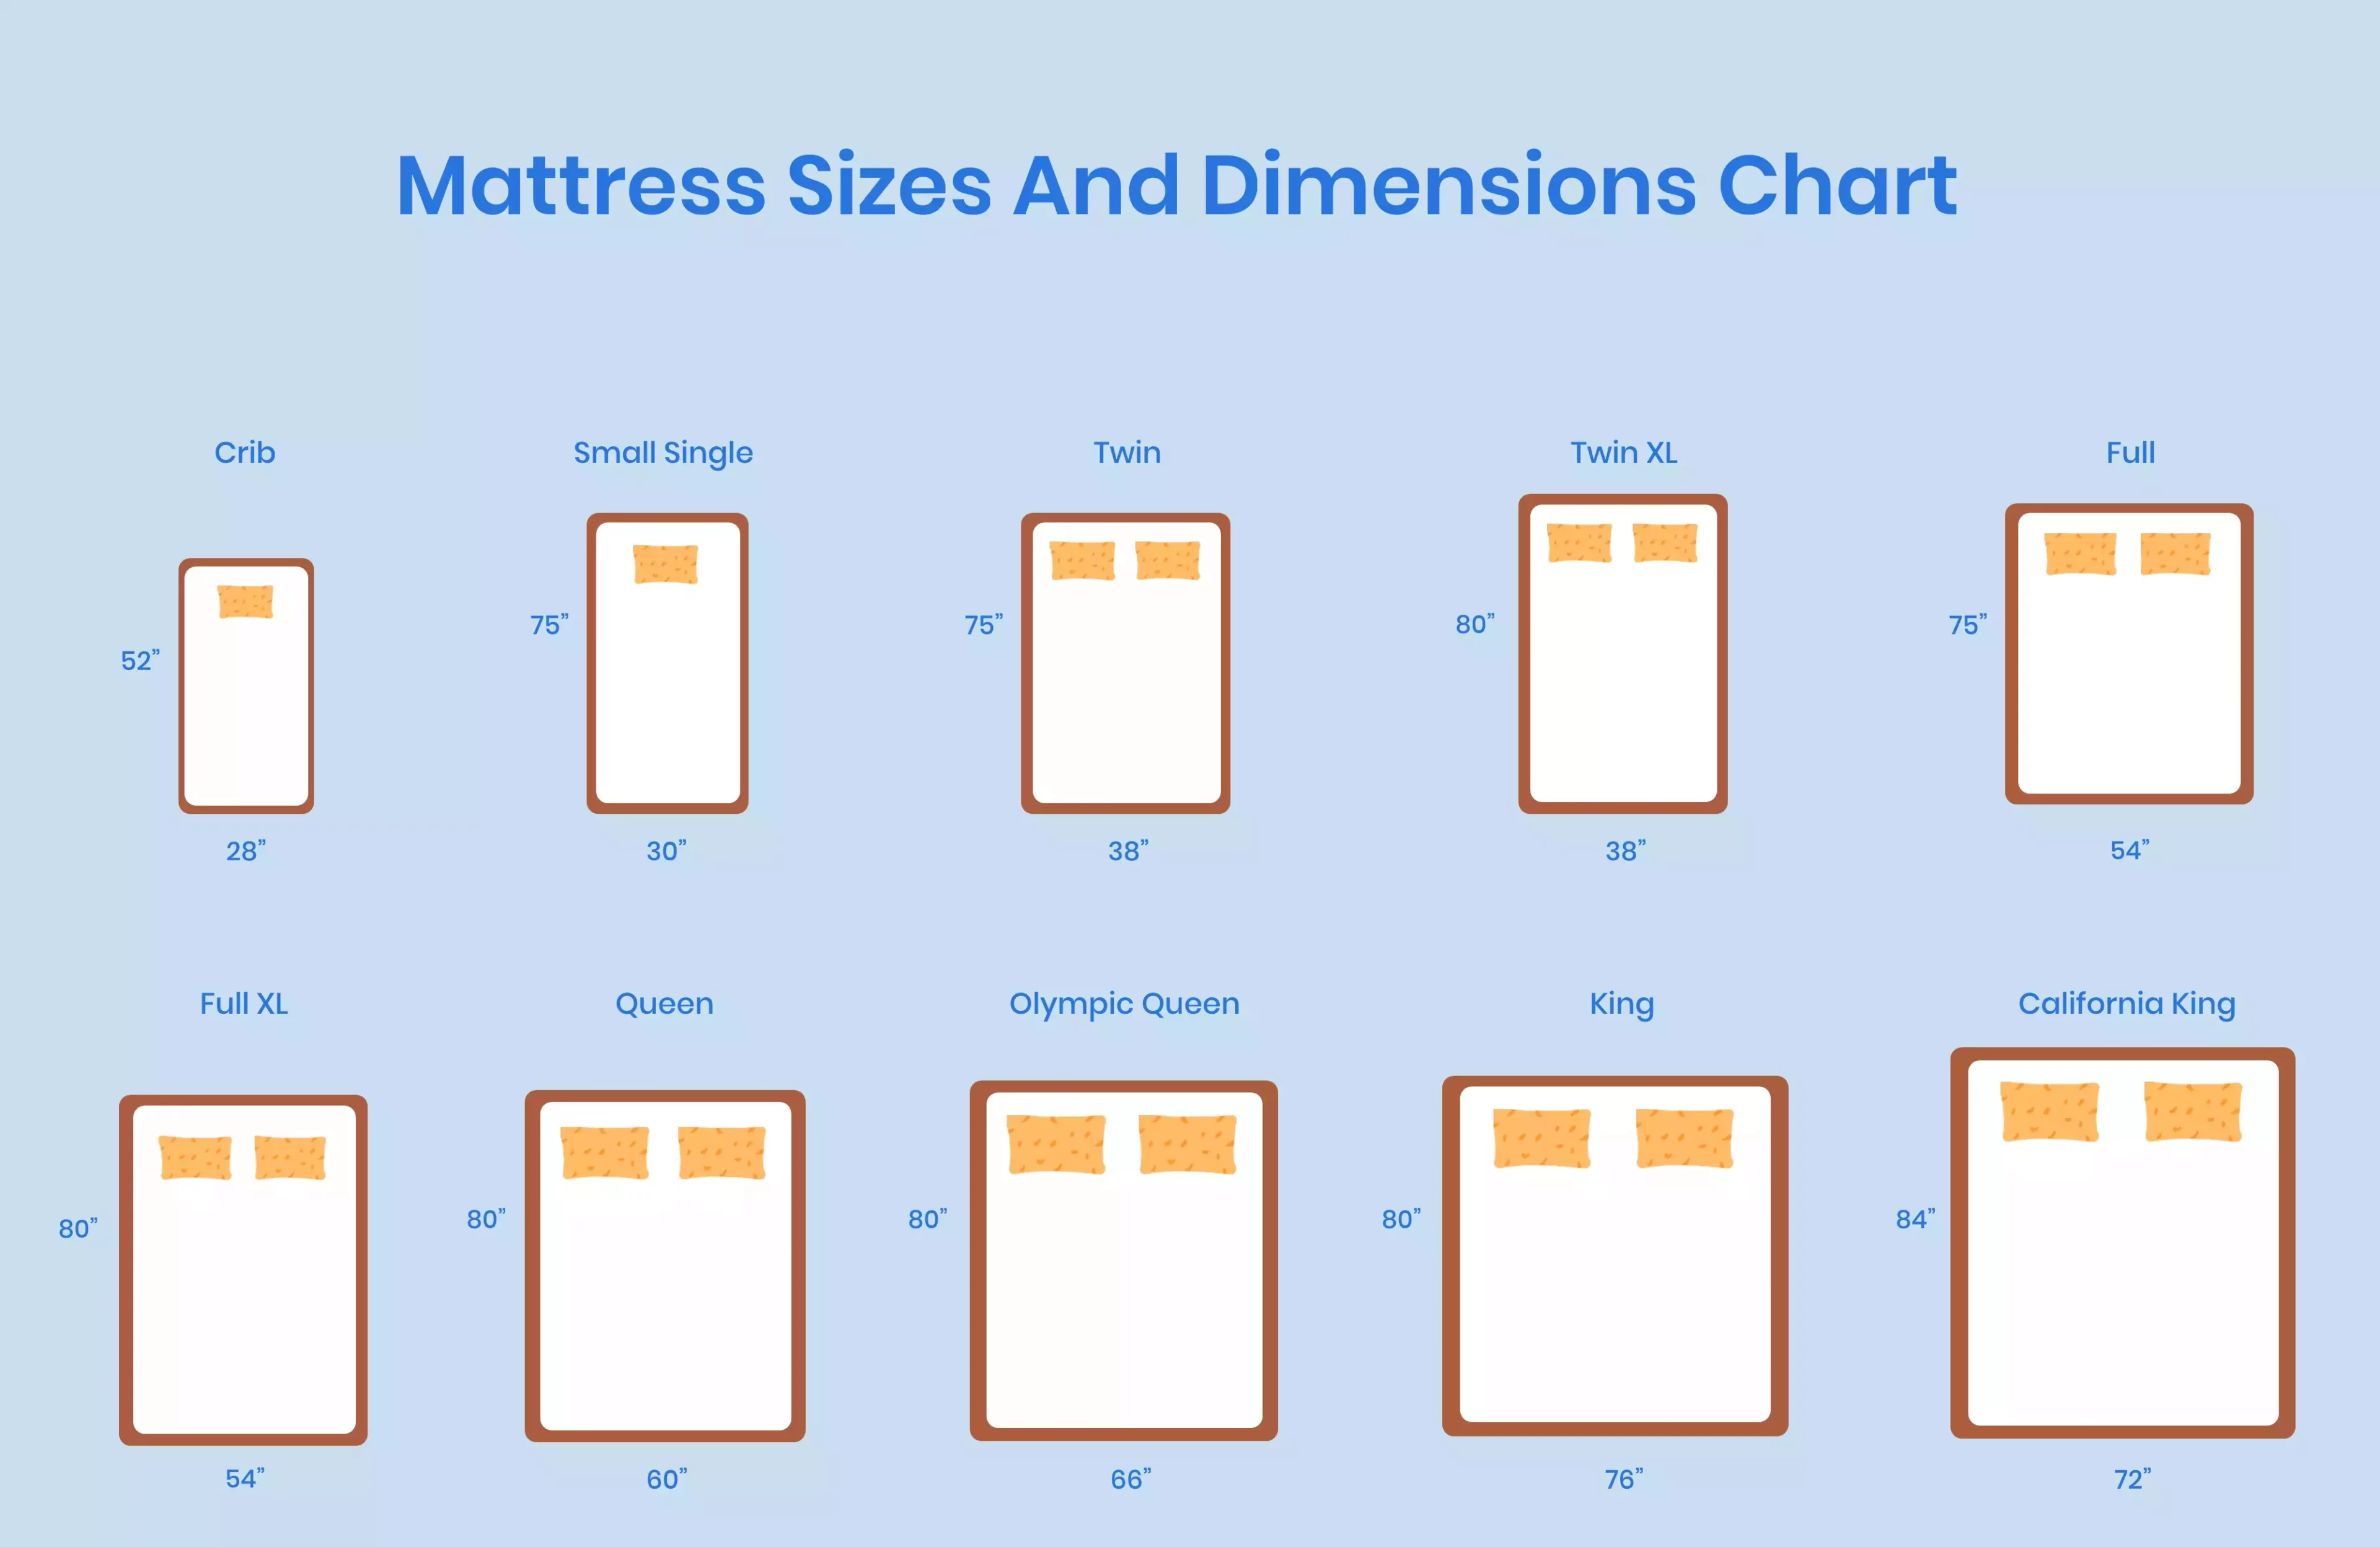 How Do California King Mattress Measurements Compare To Standard Mattress Measurements?